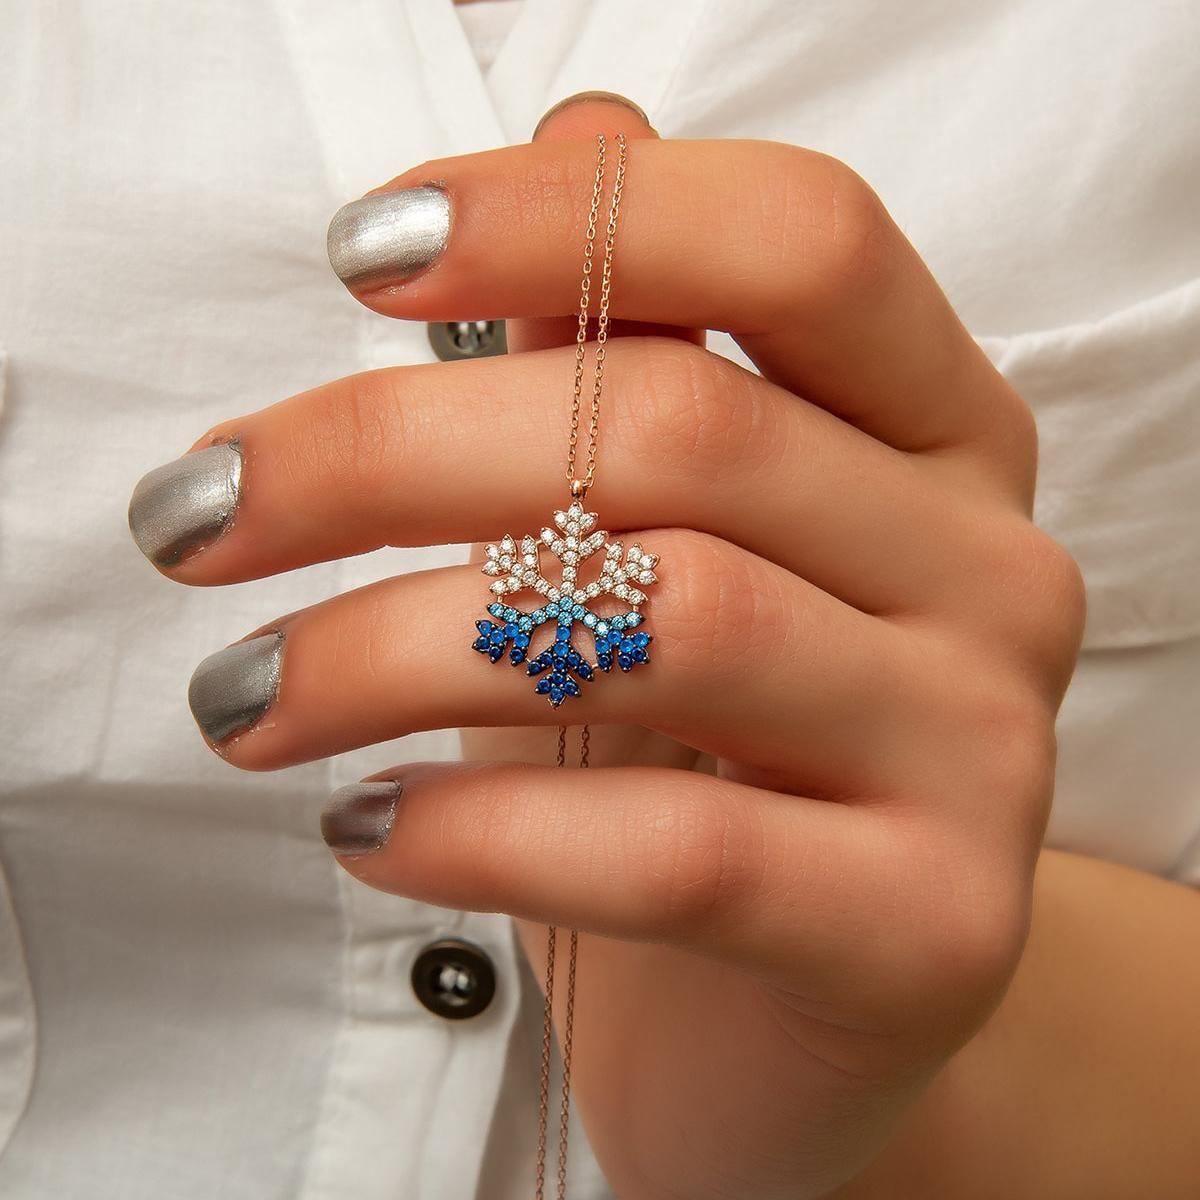 Blue Snowflake Necklace Diamond • White Snowflake Pendant Necklace - Trending Silver Gifts